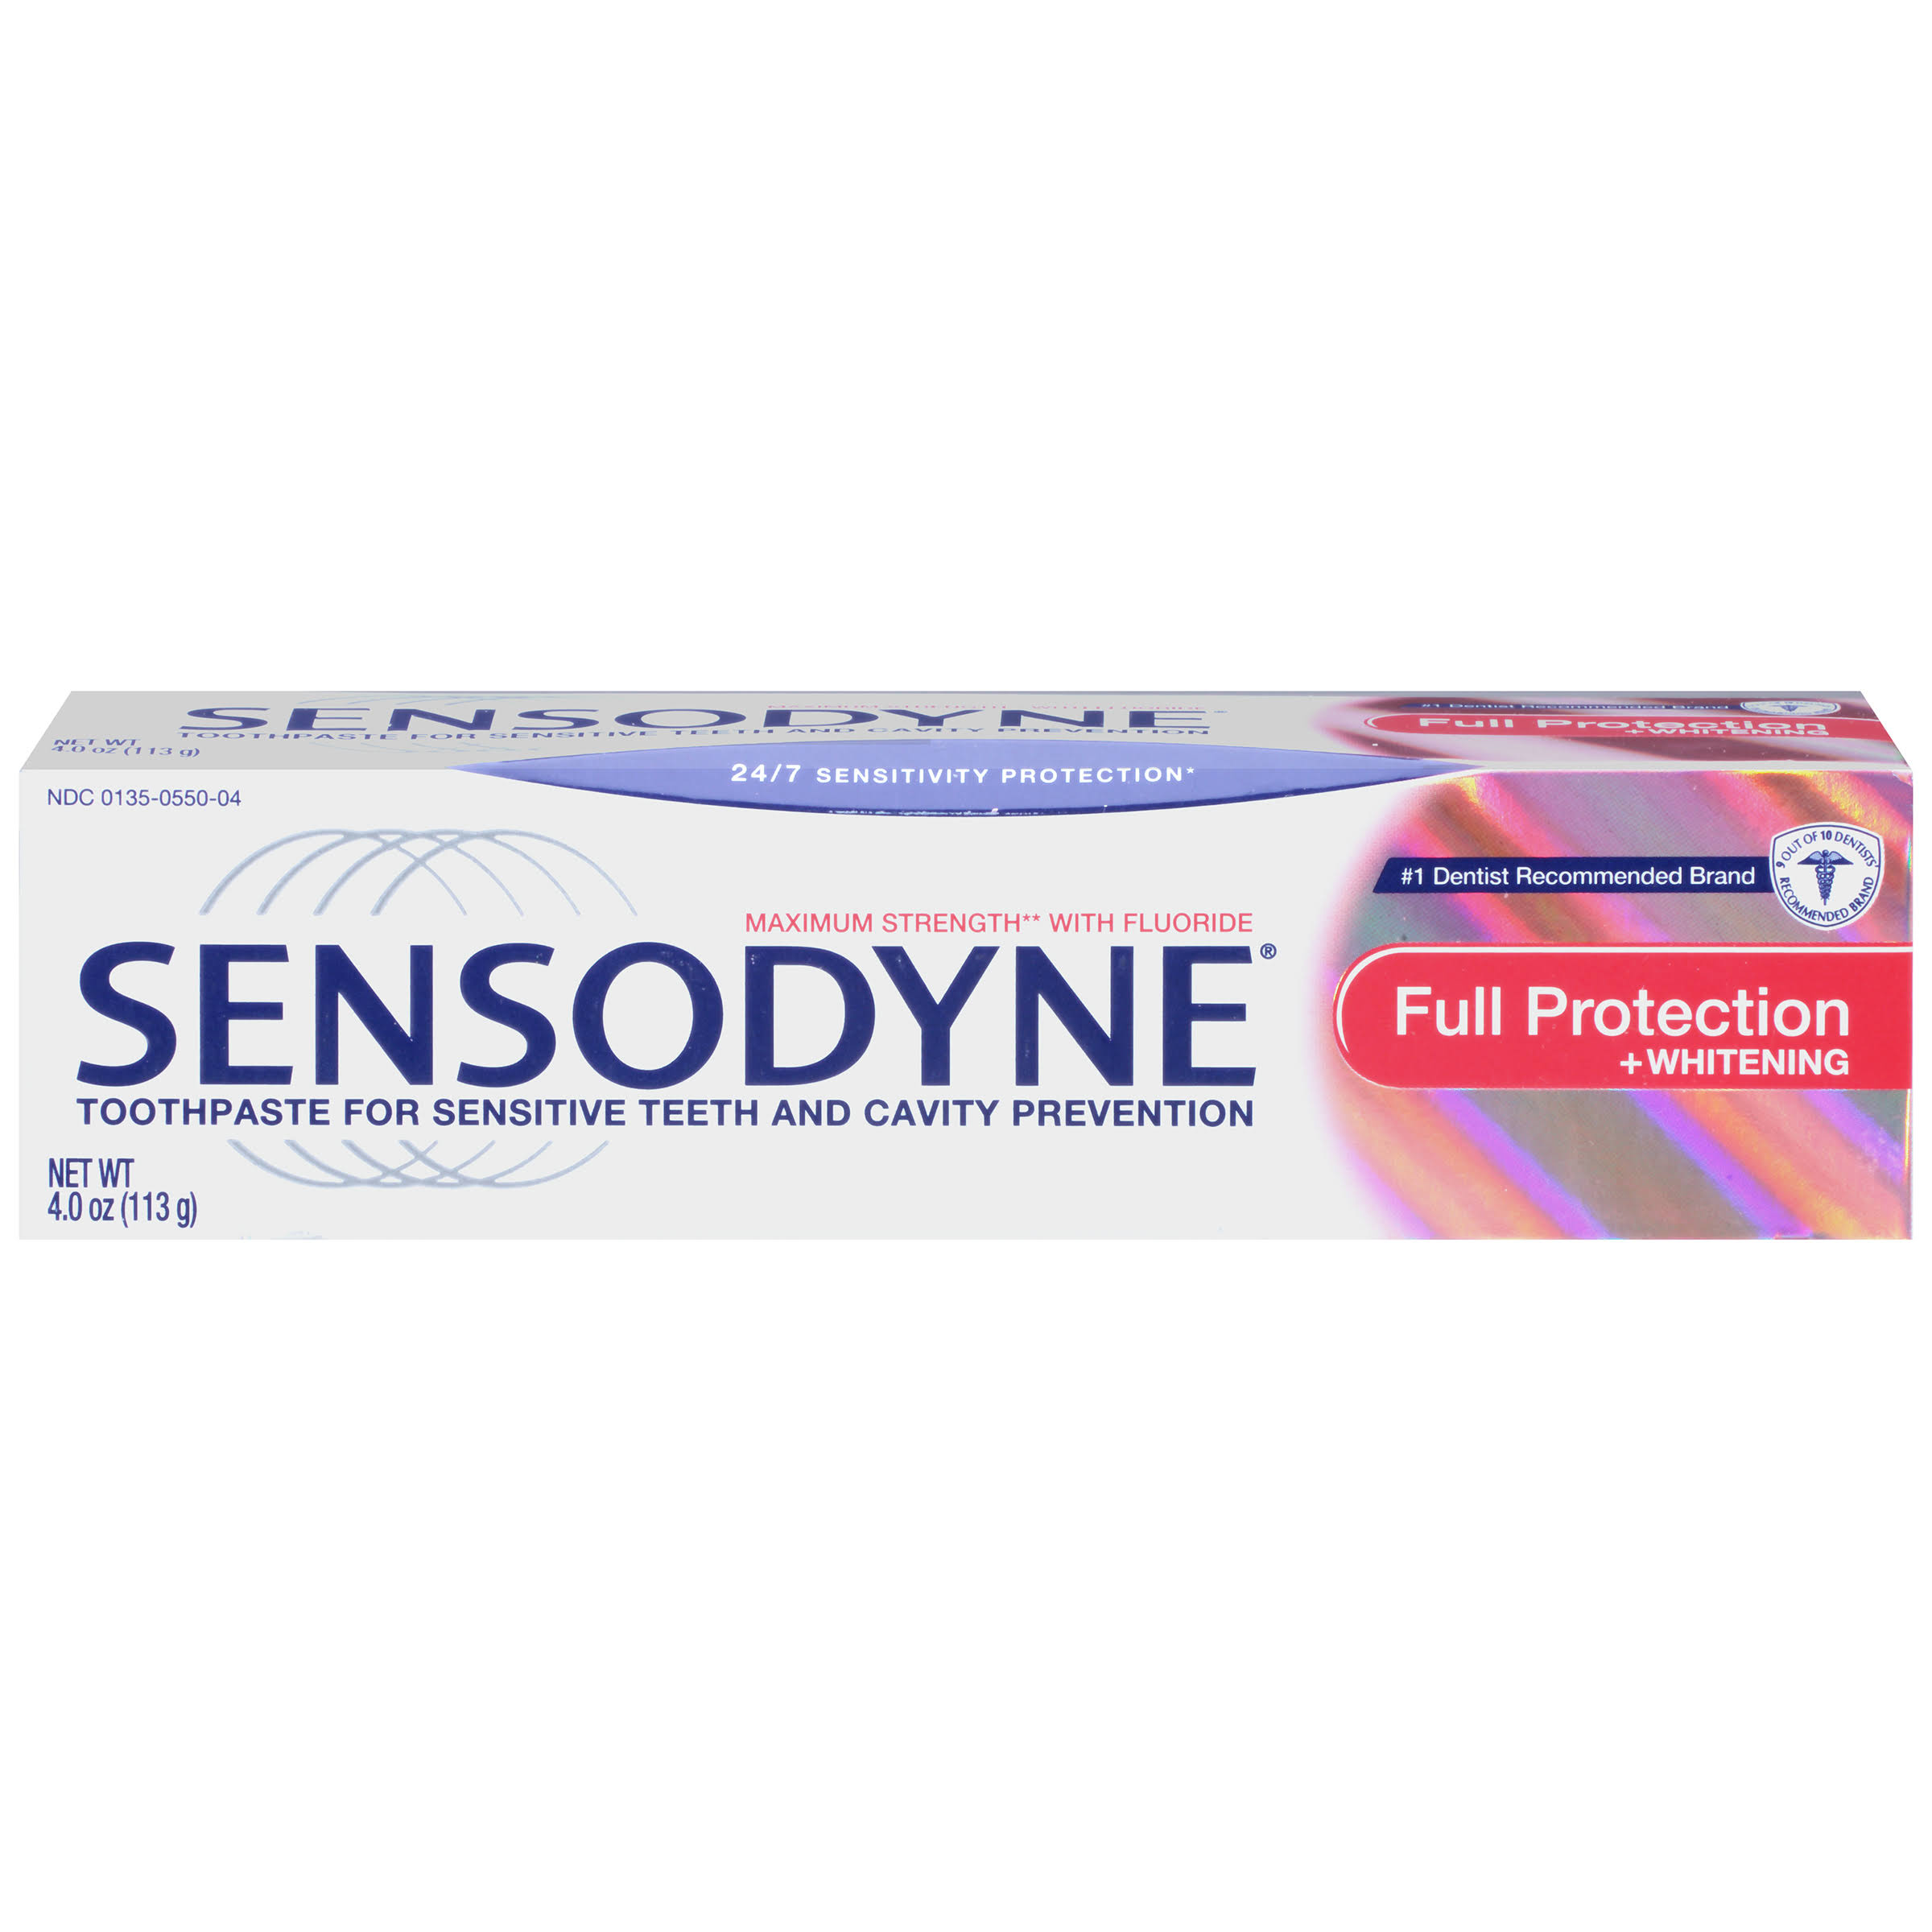 Sensodyne Full Protection + Whitening Toothpaste - 4.0oz